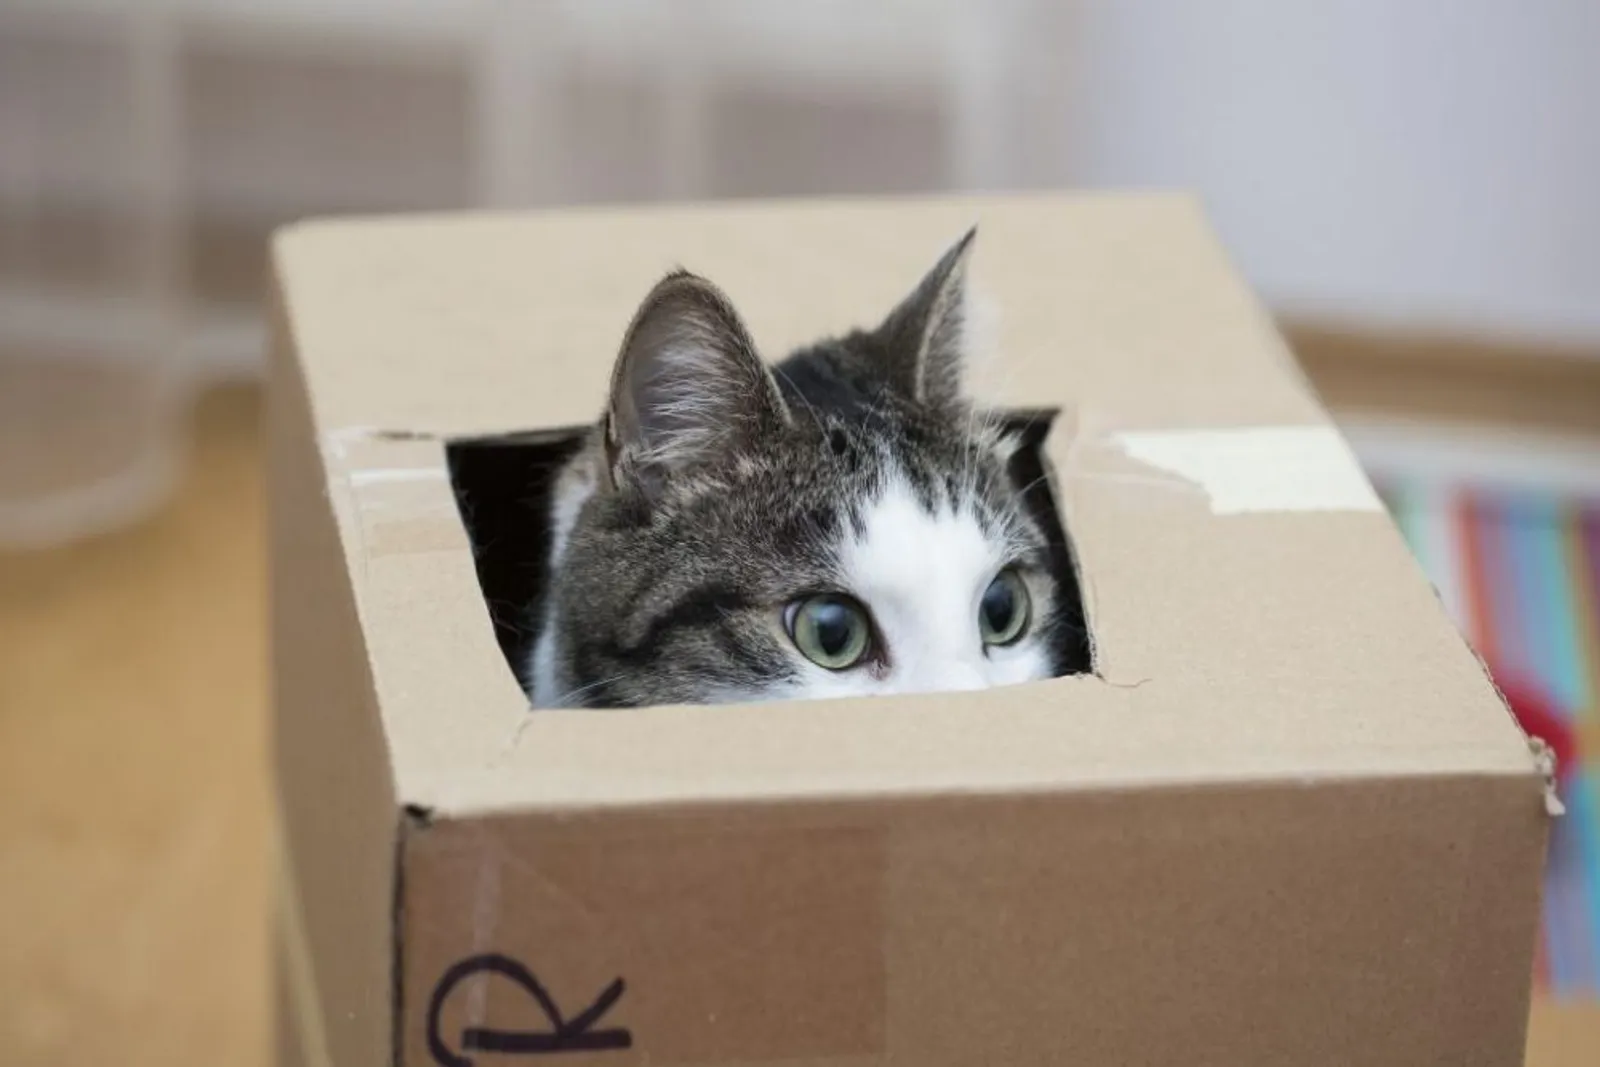 8 Penjelasan Ilmiah Kenapa Kucing Suka Bermain dengan Kardus